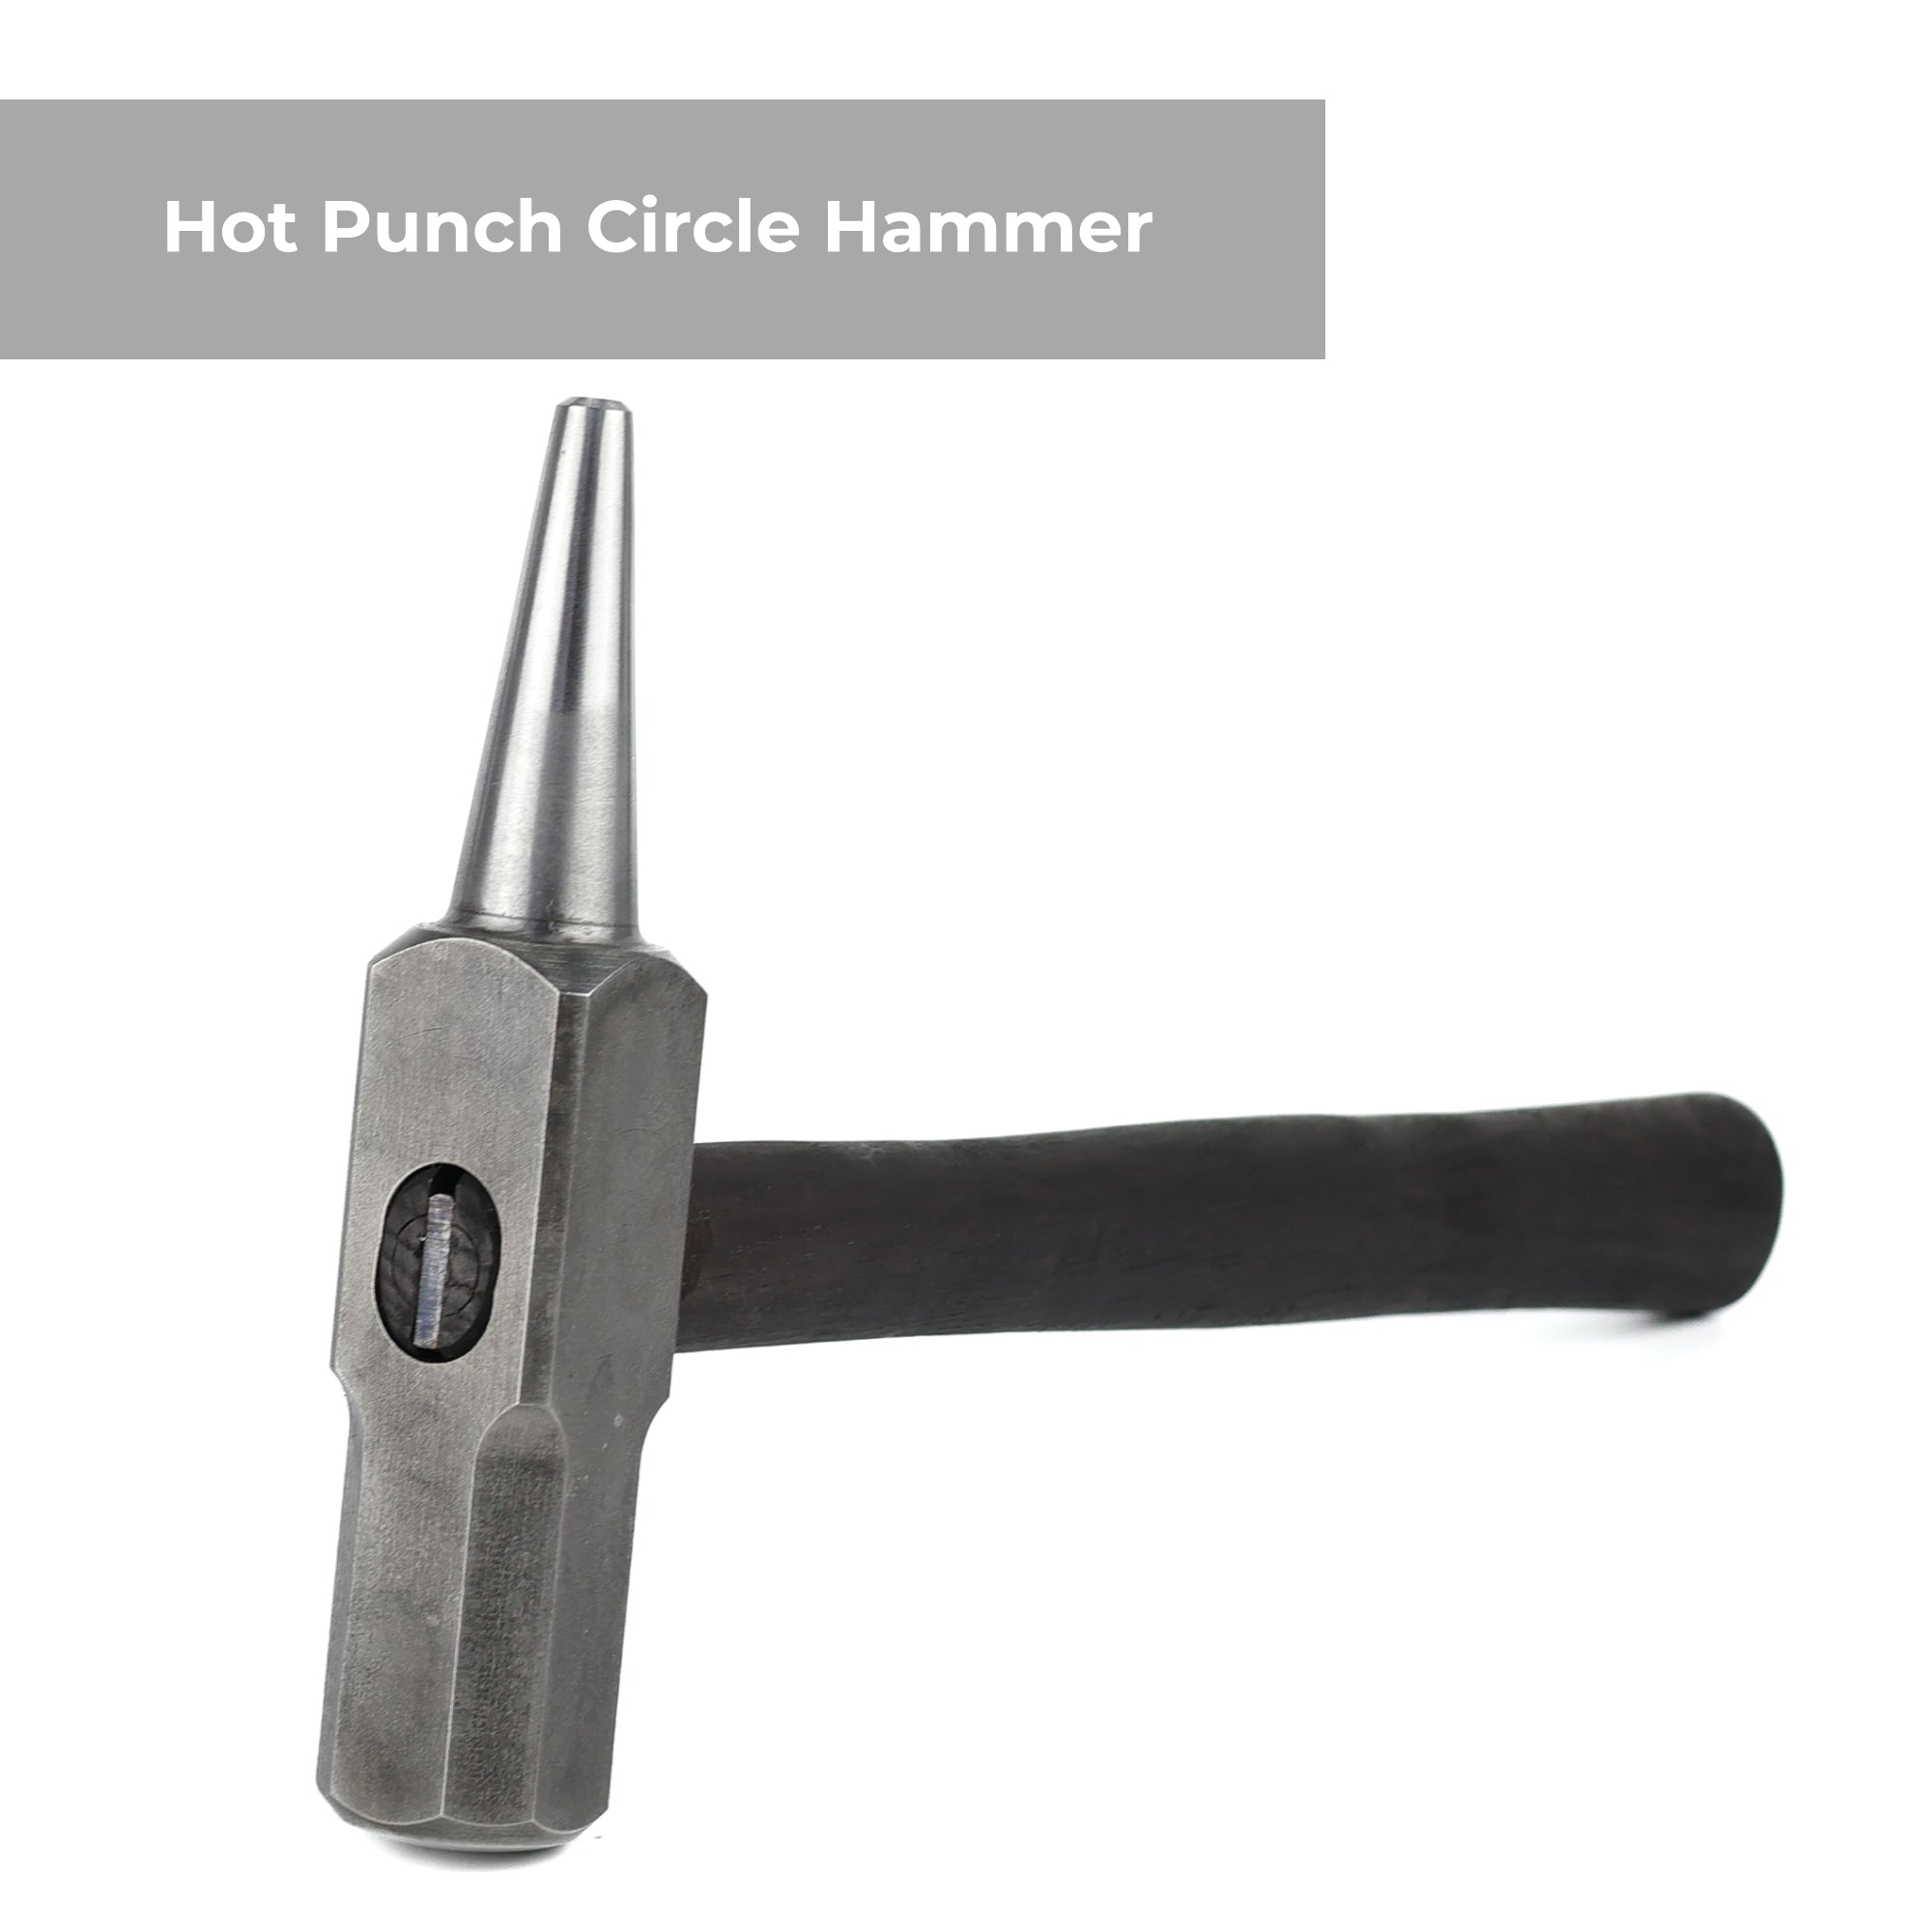 Hot Punch Circle Hammer Drift for Blacksmiting 2.2 lbs